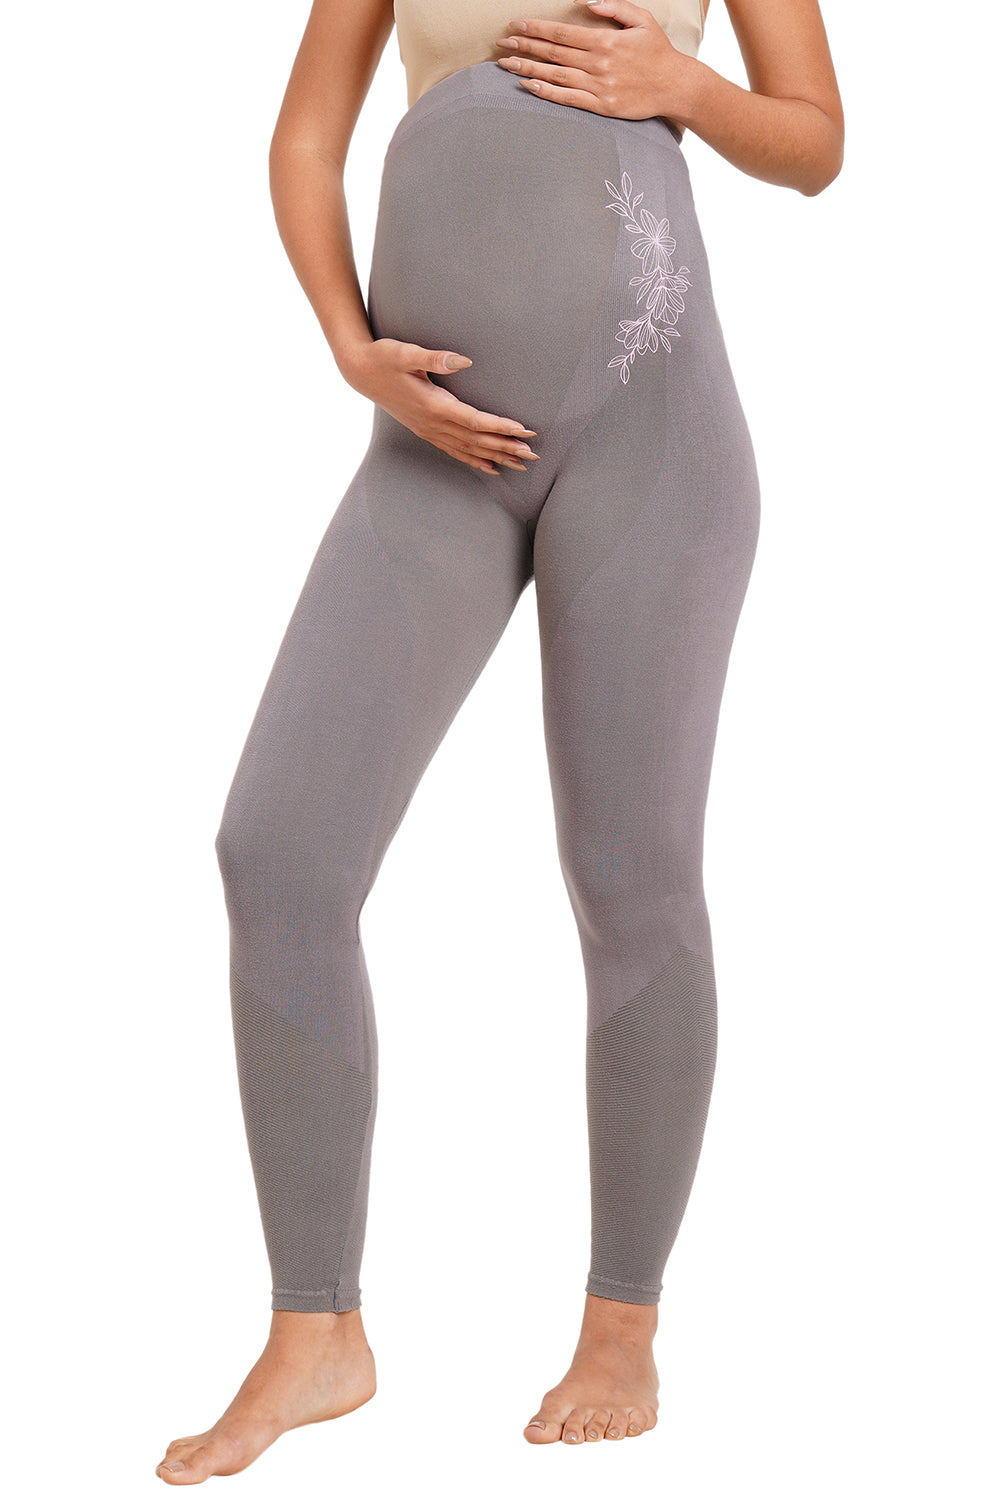 Super soft Bamboo Fibre Antimicrobial Seamless maternity  legging-ISML003-Steel Grey